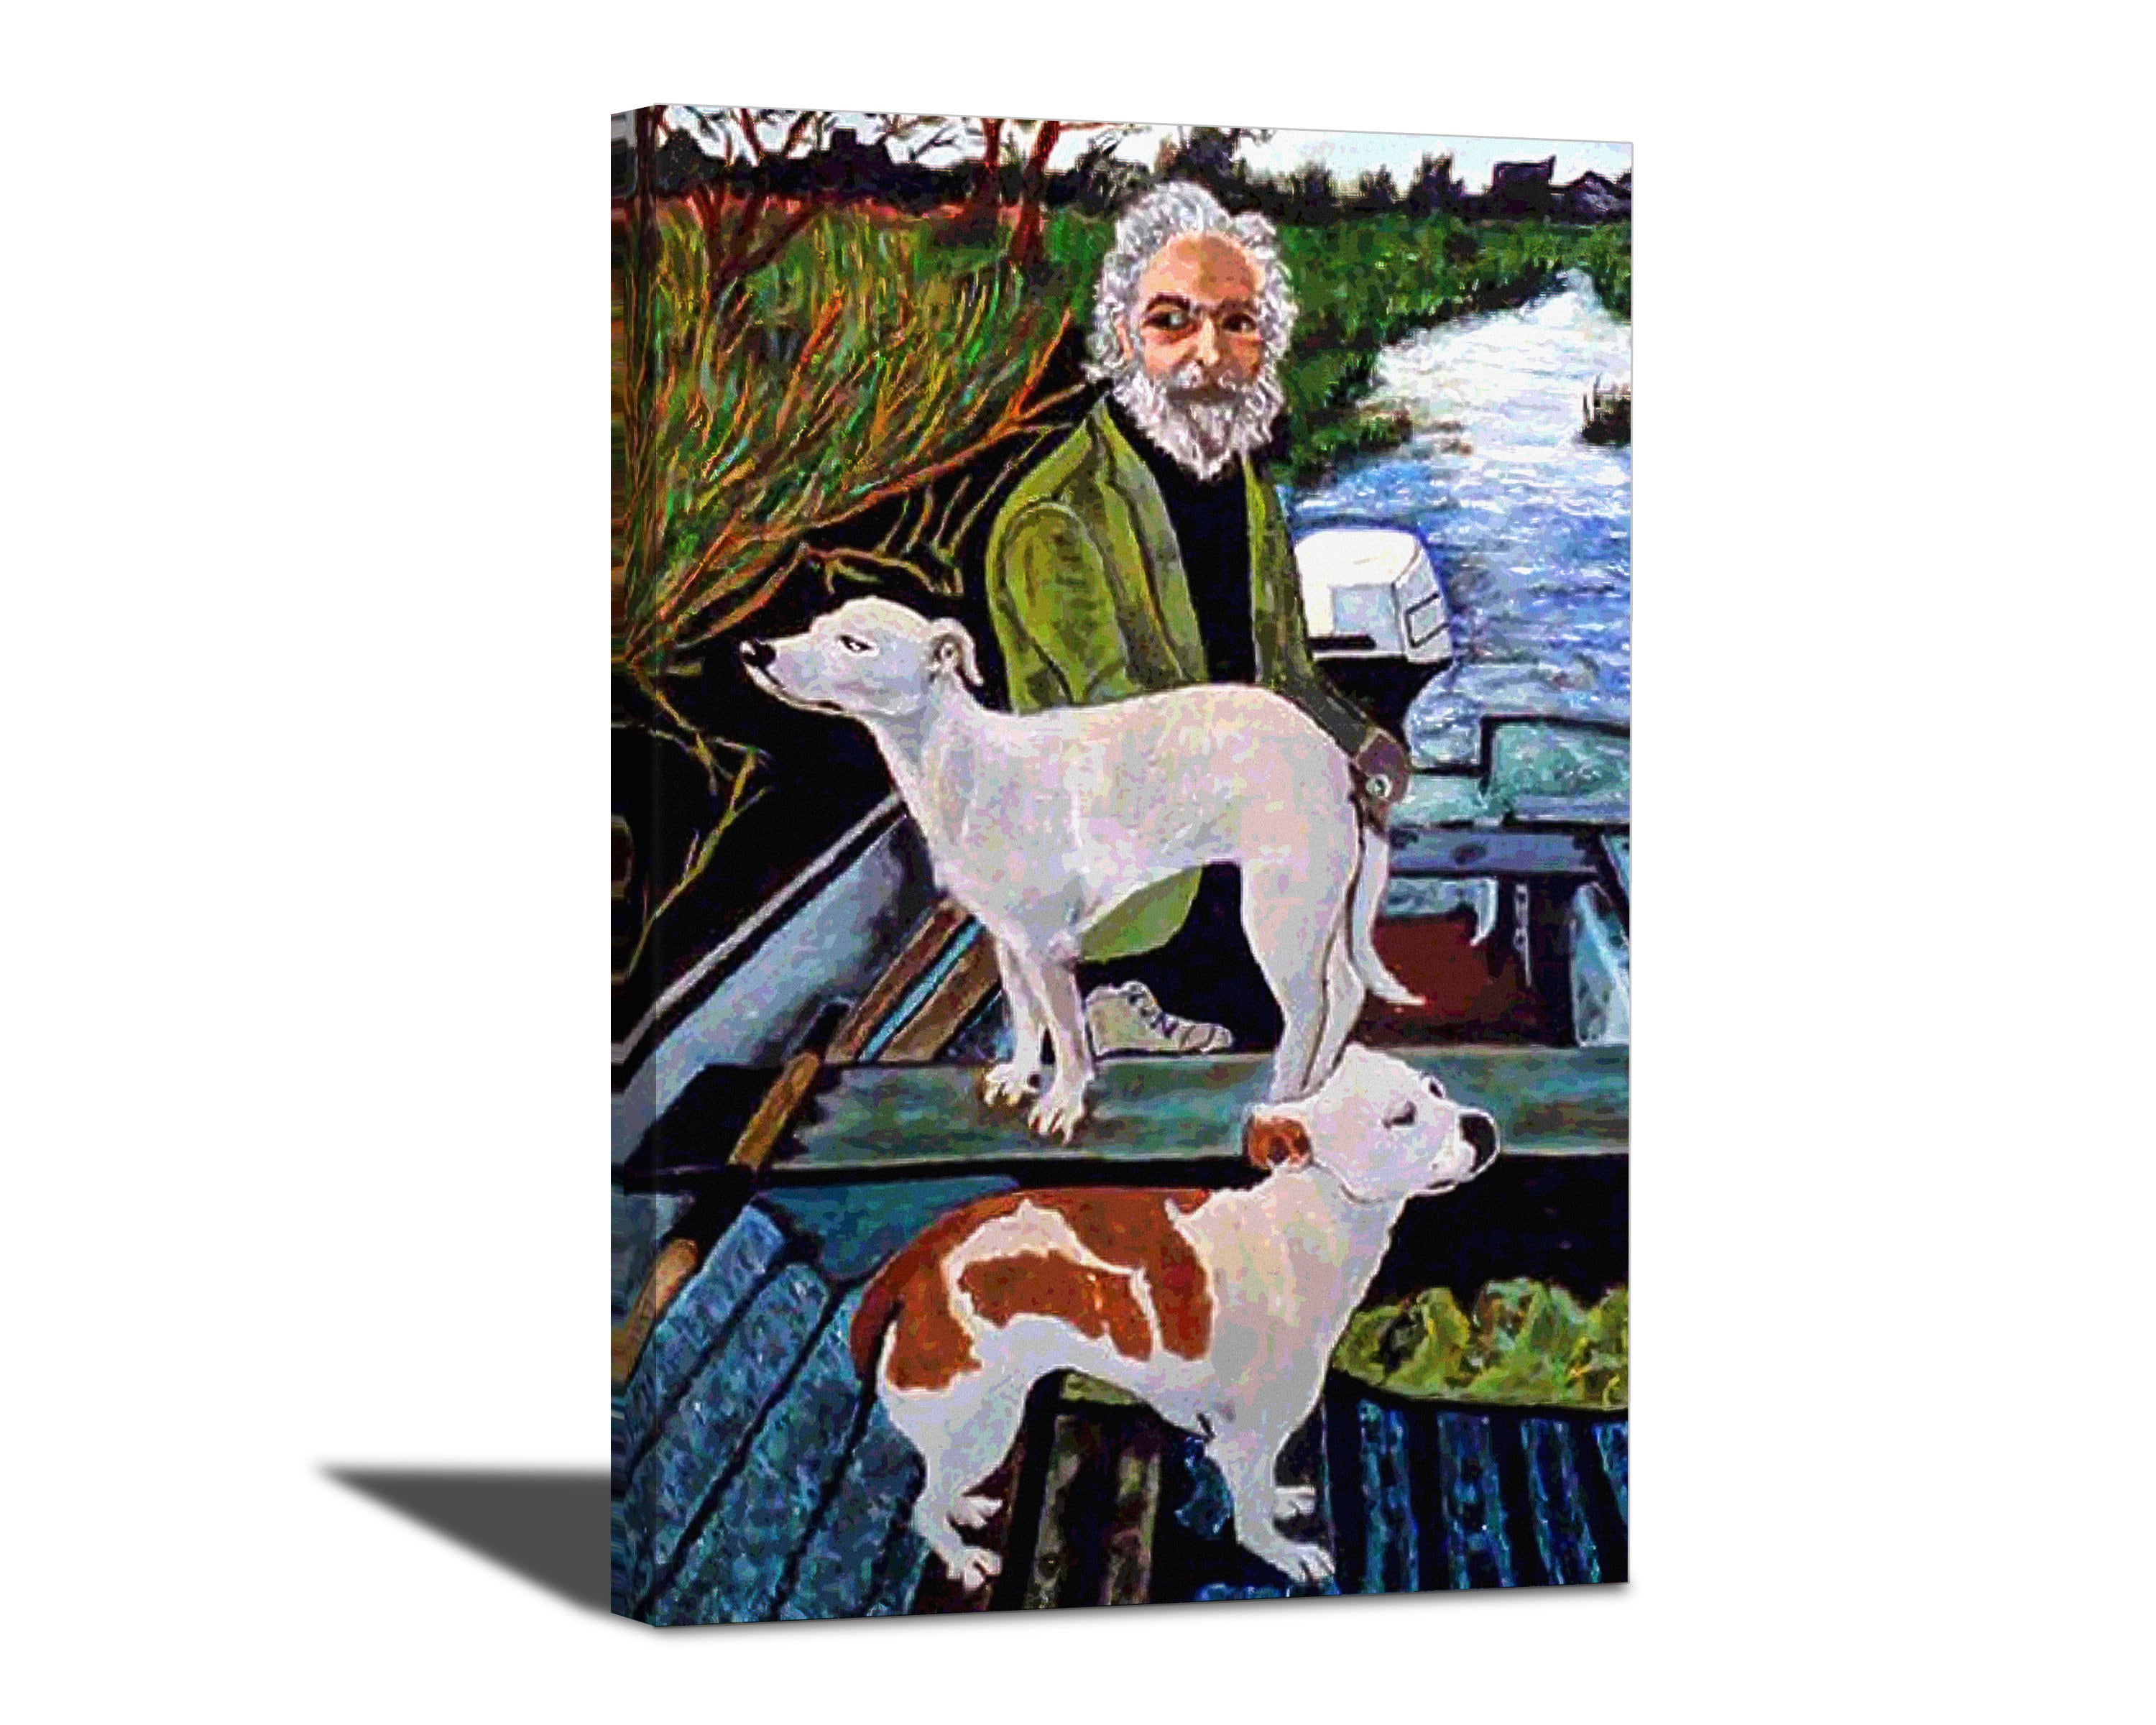 Goodfellas Painting Wall Art Canvas, Whaddaya Want, Man and Dog Portrait Print, National Geographic Poster Wall Decor